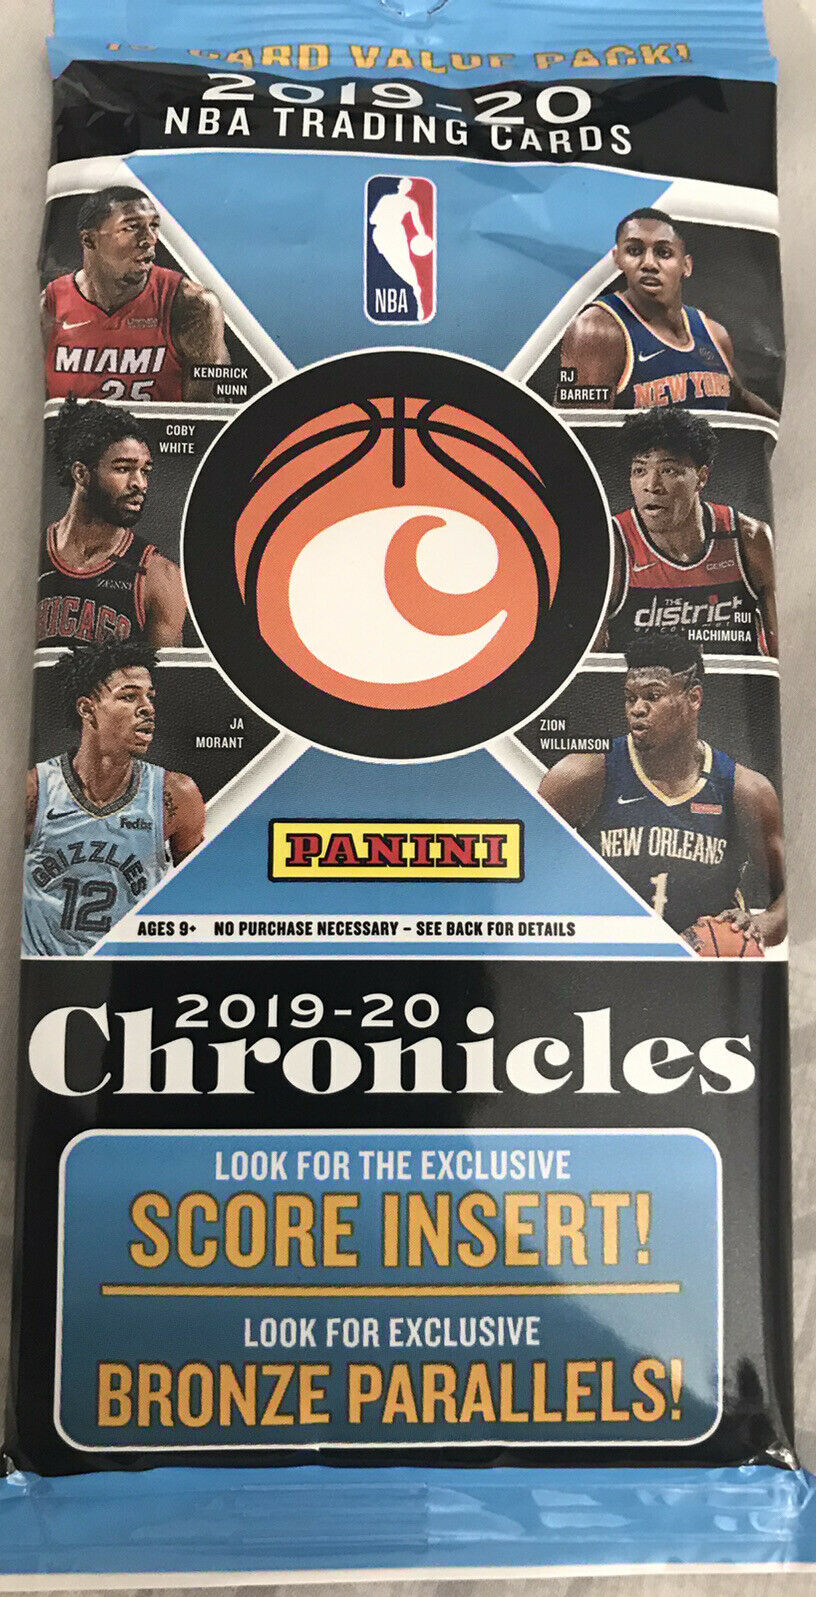 2019/20 Panini Chronicles Basketball Fat Pack